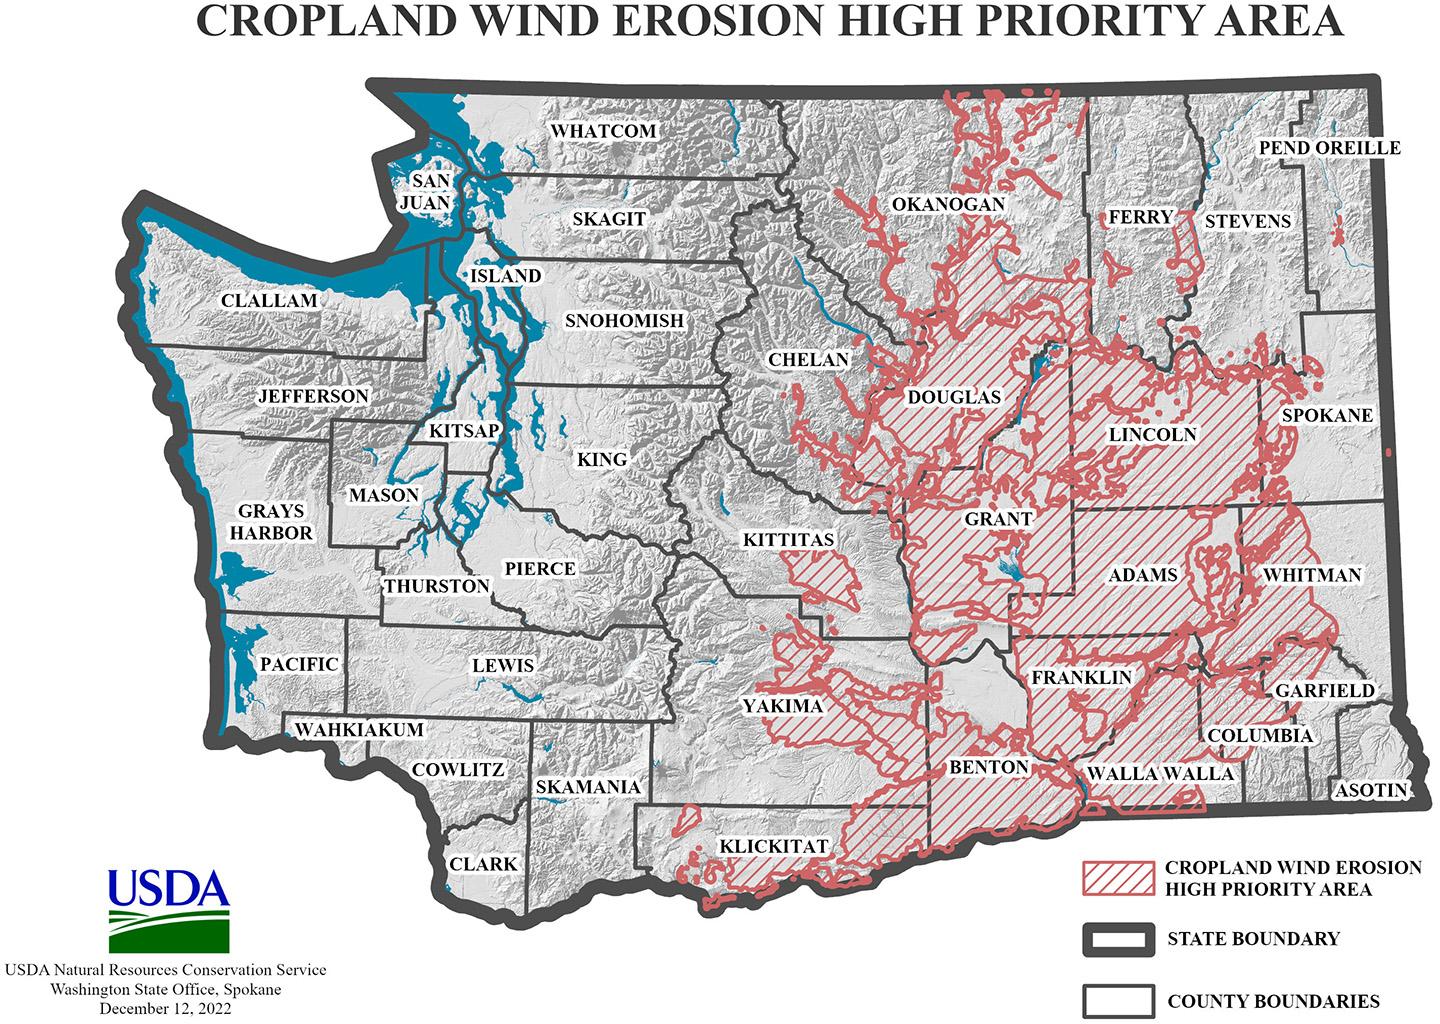 Cropland Wind Erosion High Priority Area